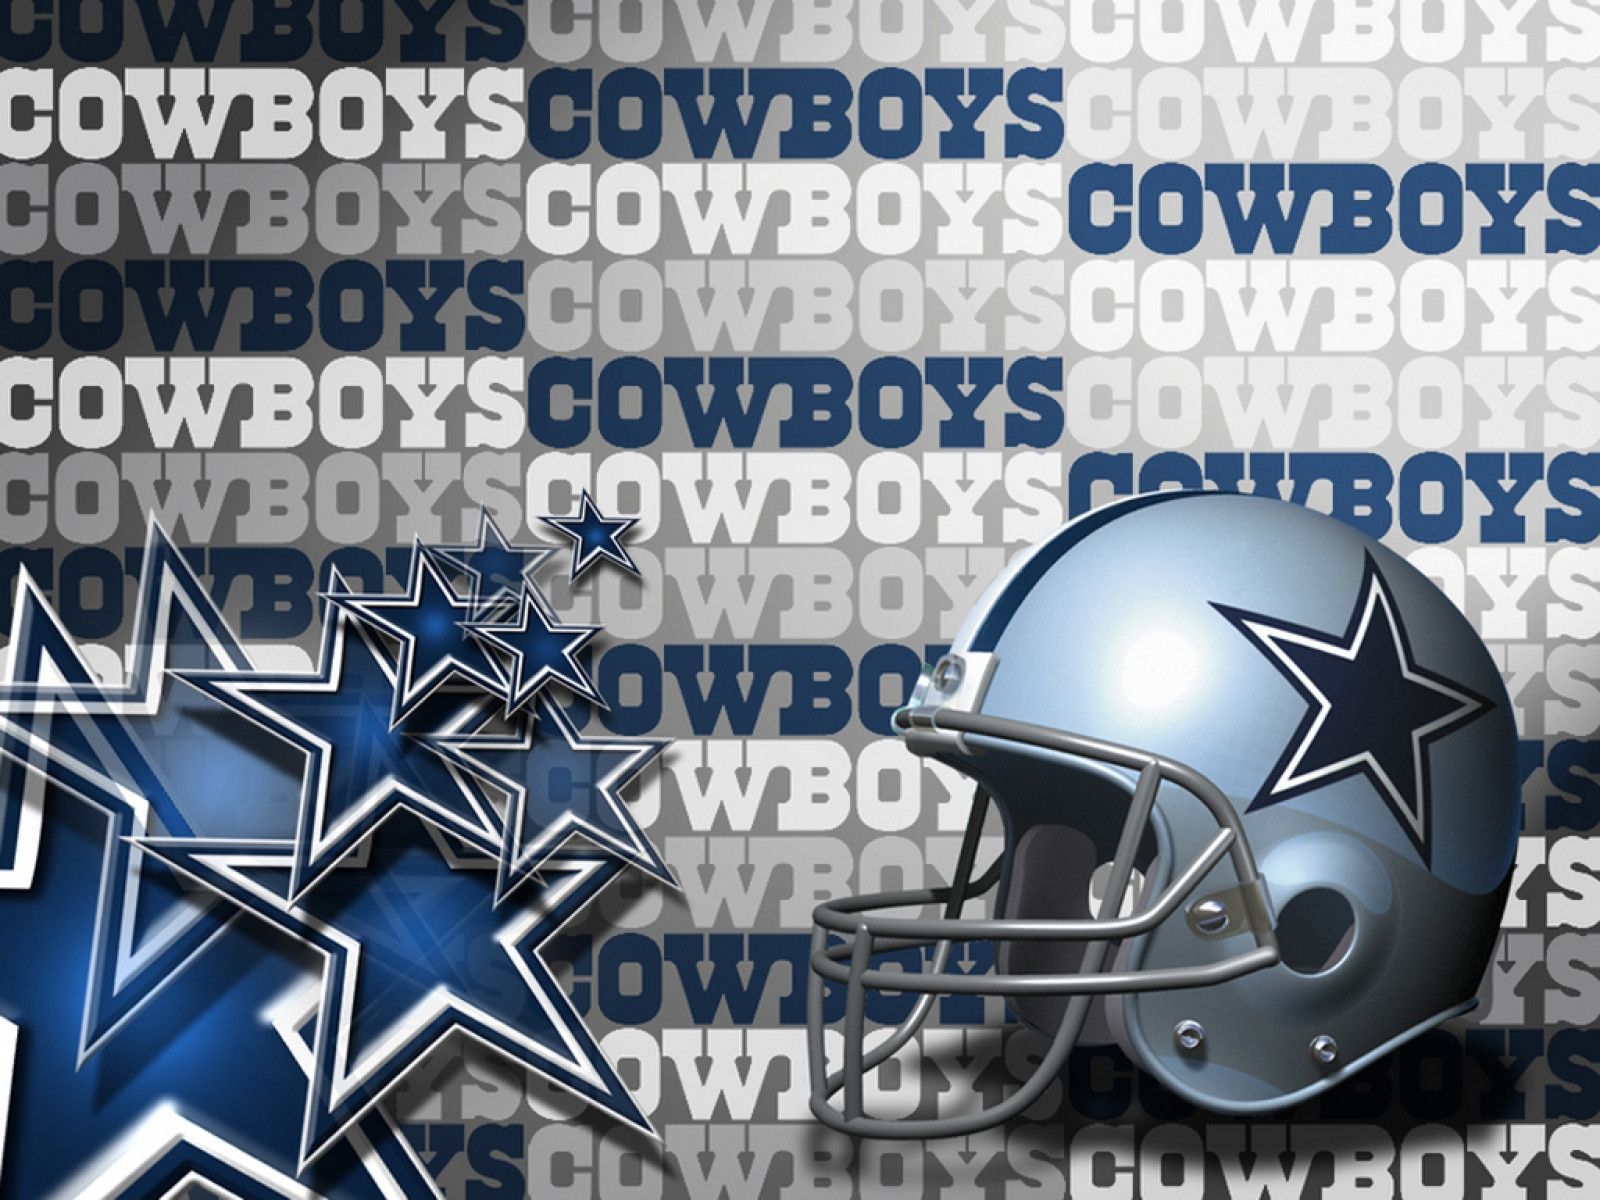 Dallas Cowboys HD Wallpaper Best